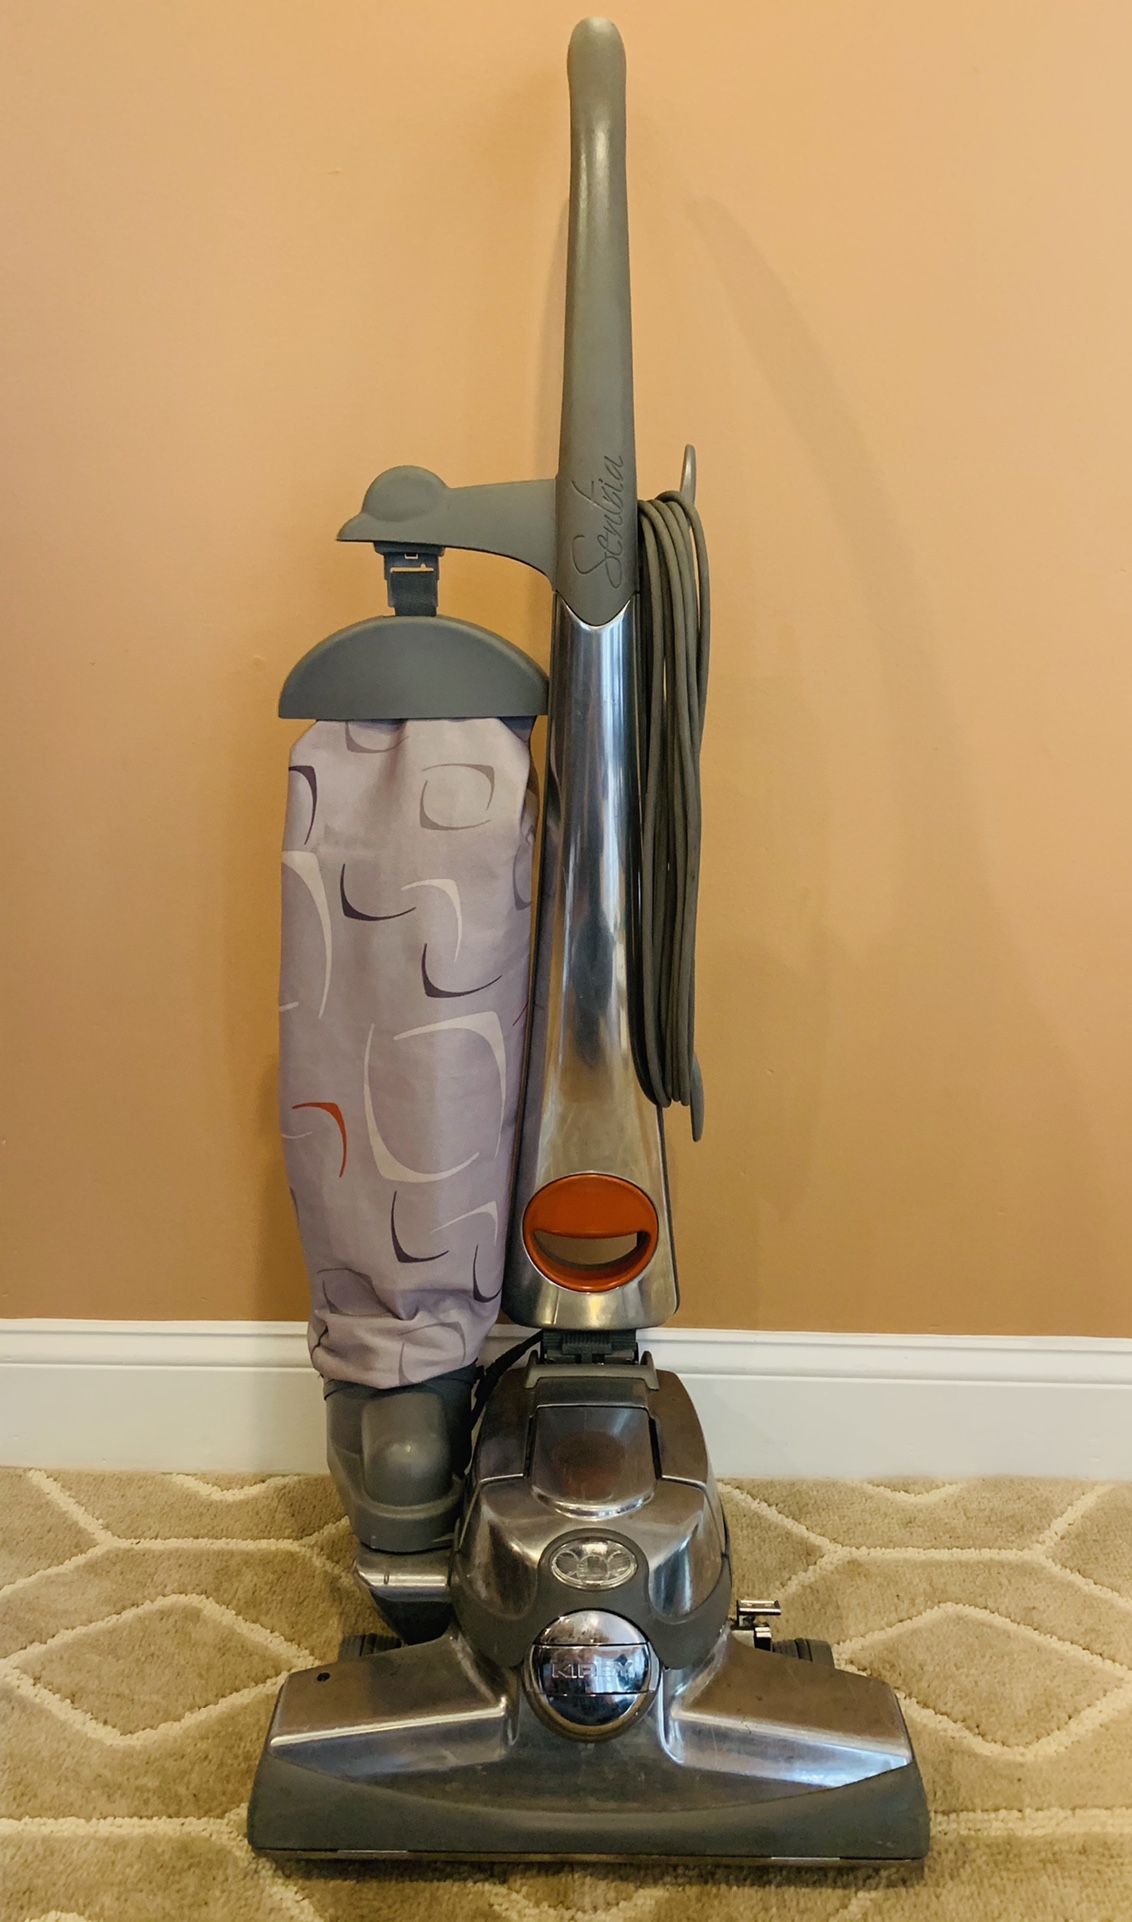 Kirby sentria vacuum cleaner